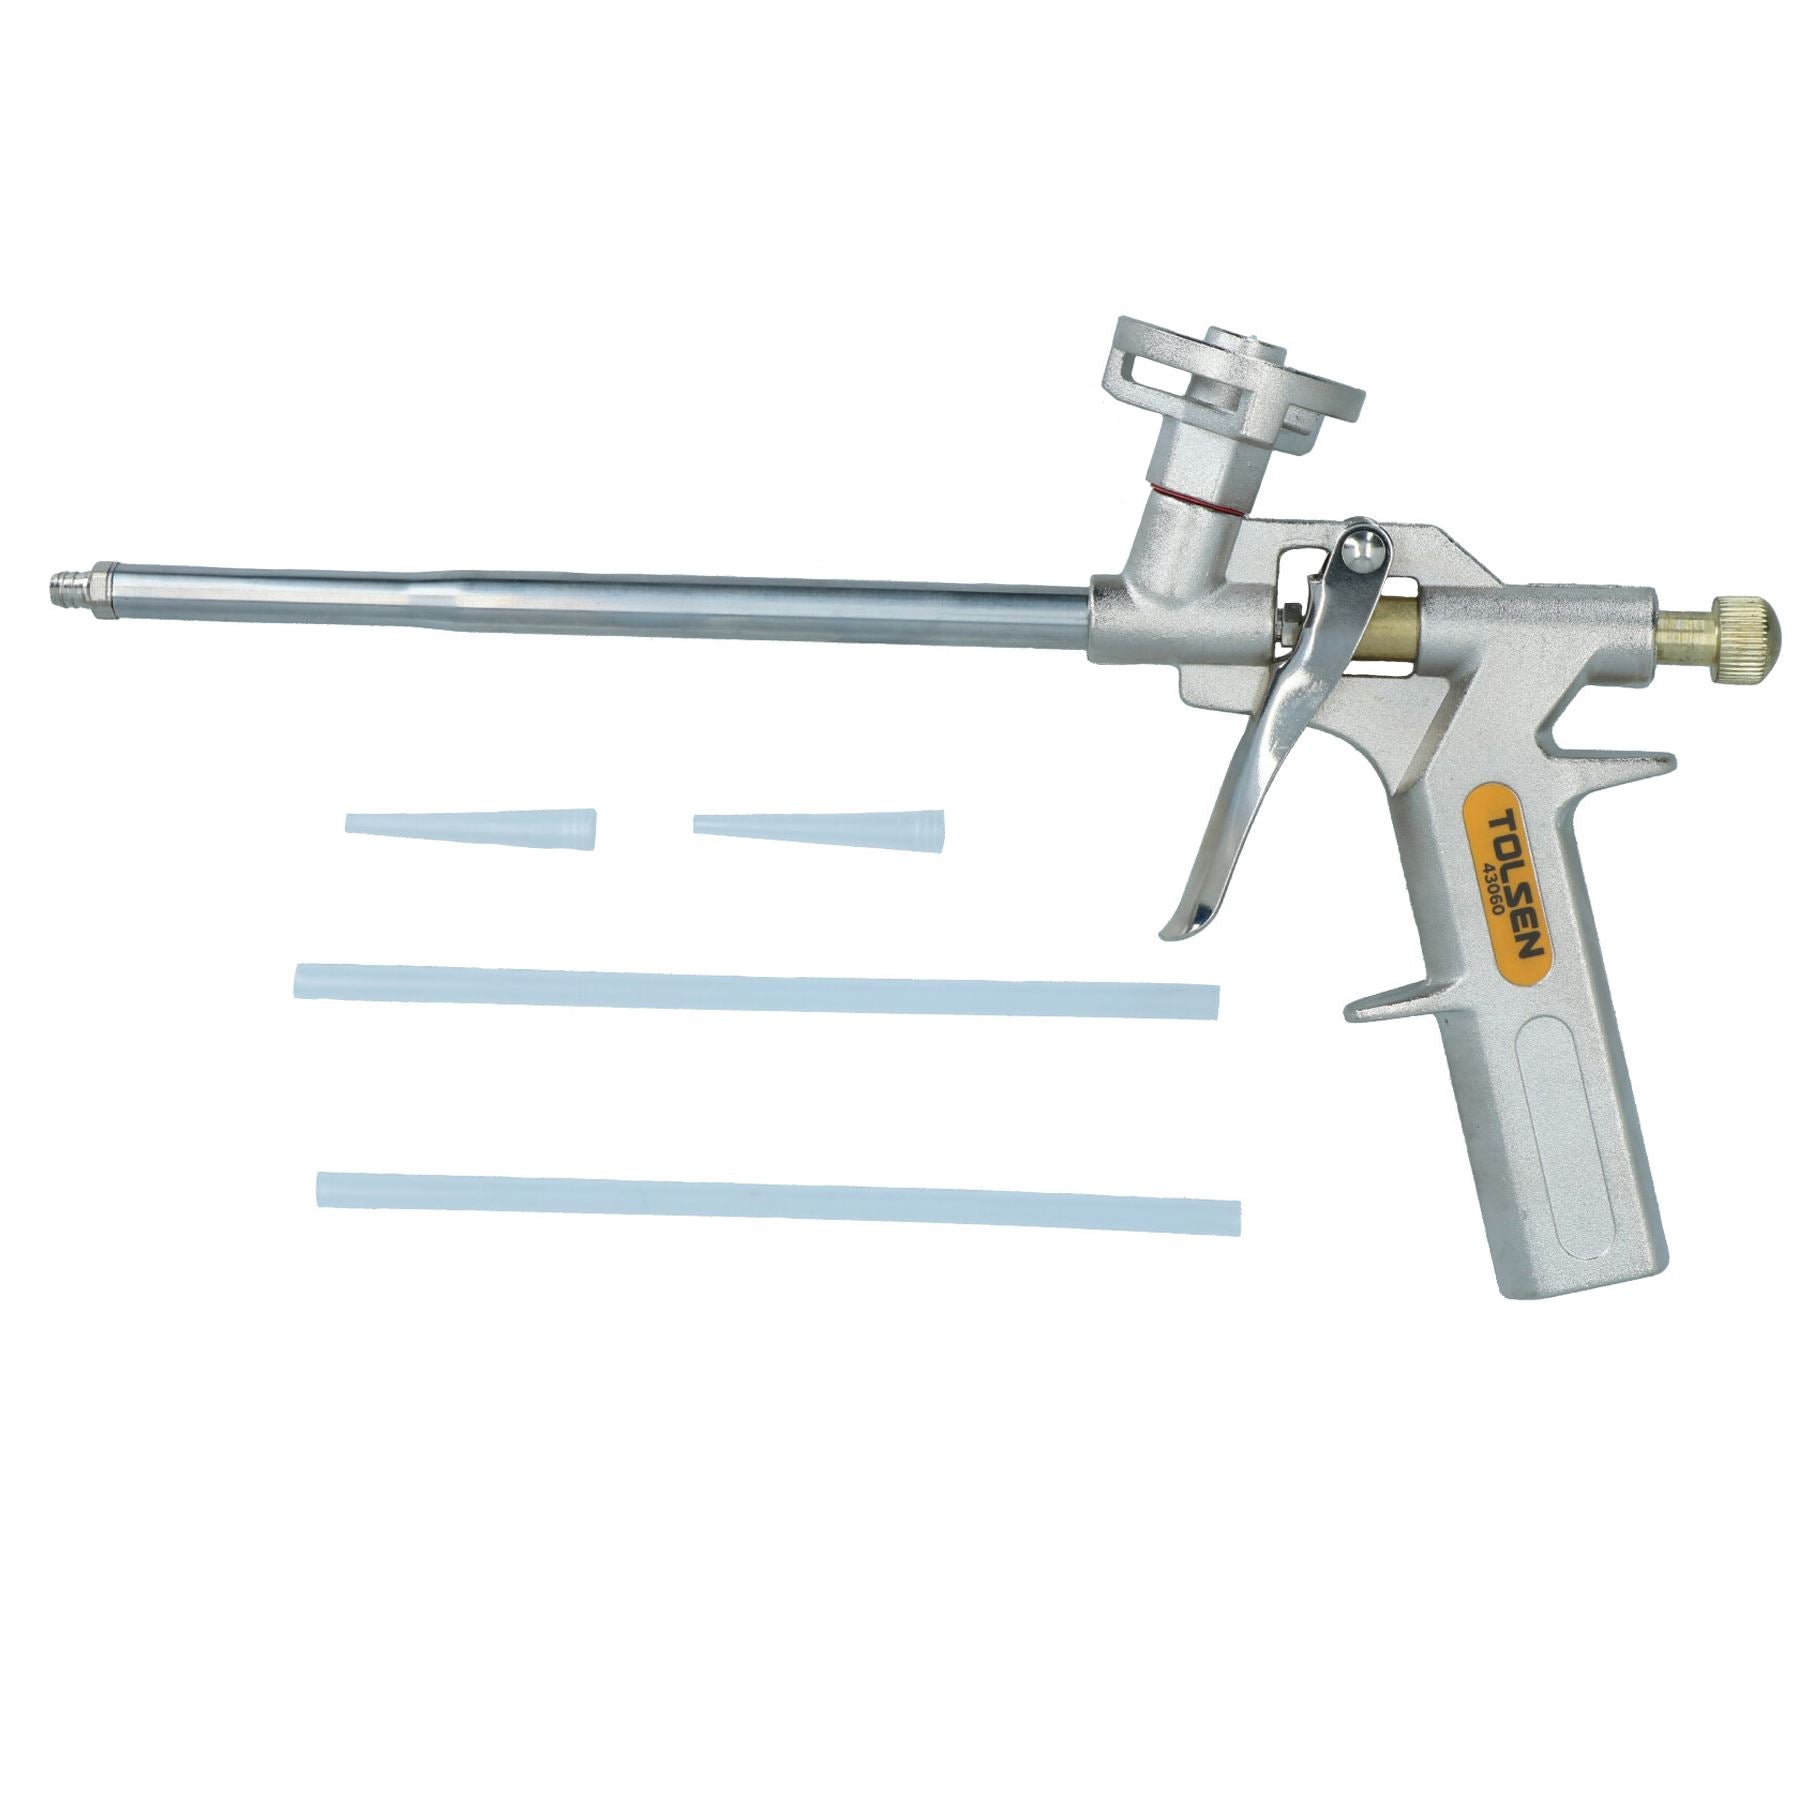 Foam Gun Metal Body Expanding PU Foam Filler Caulking Sealing Spray Applicator